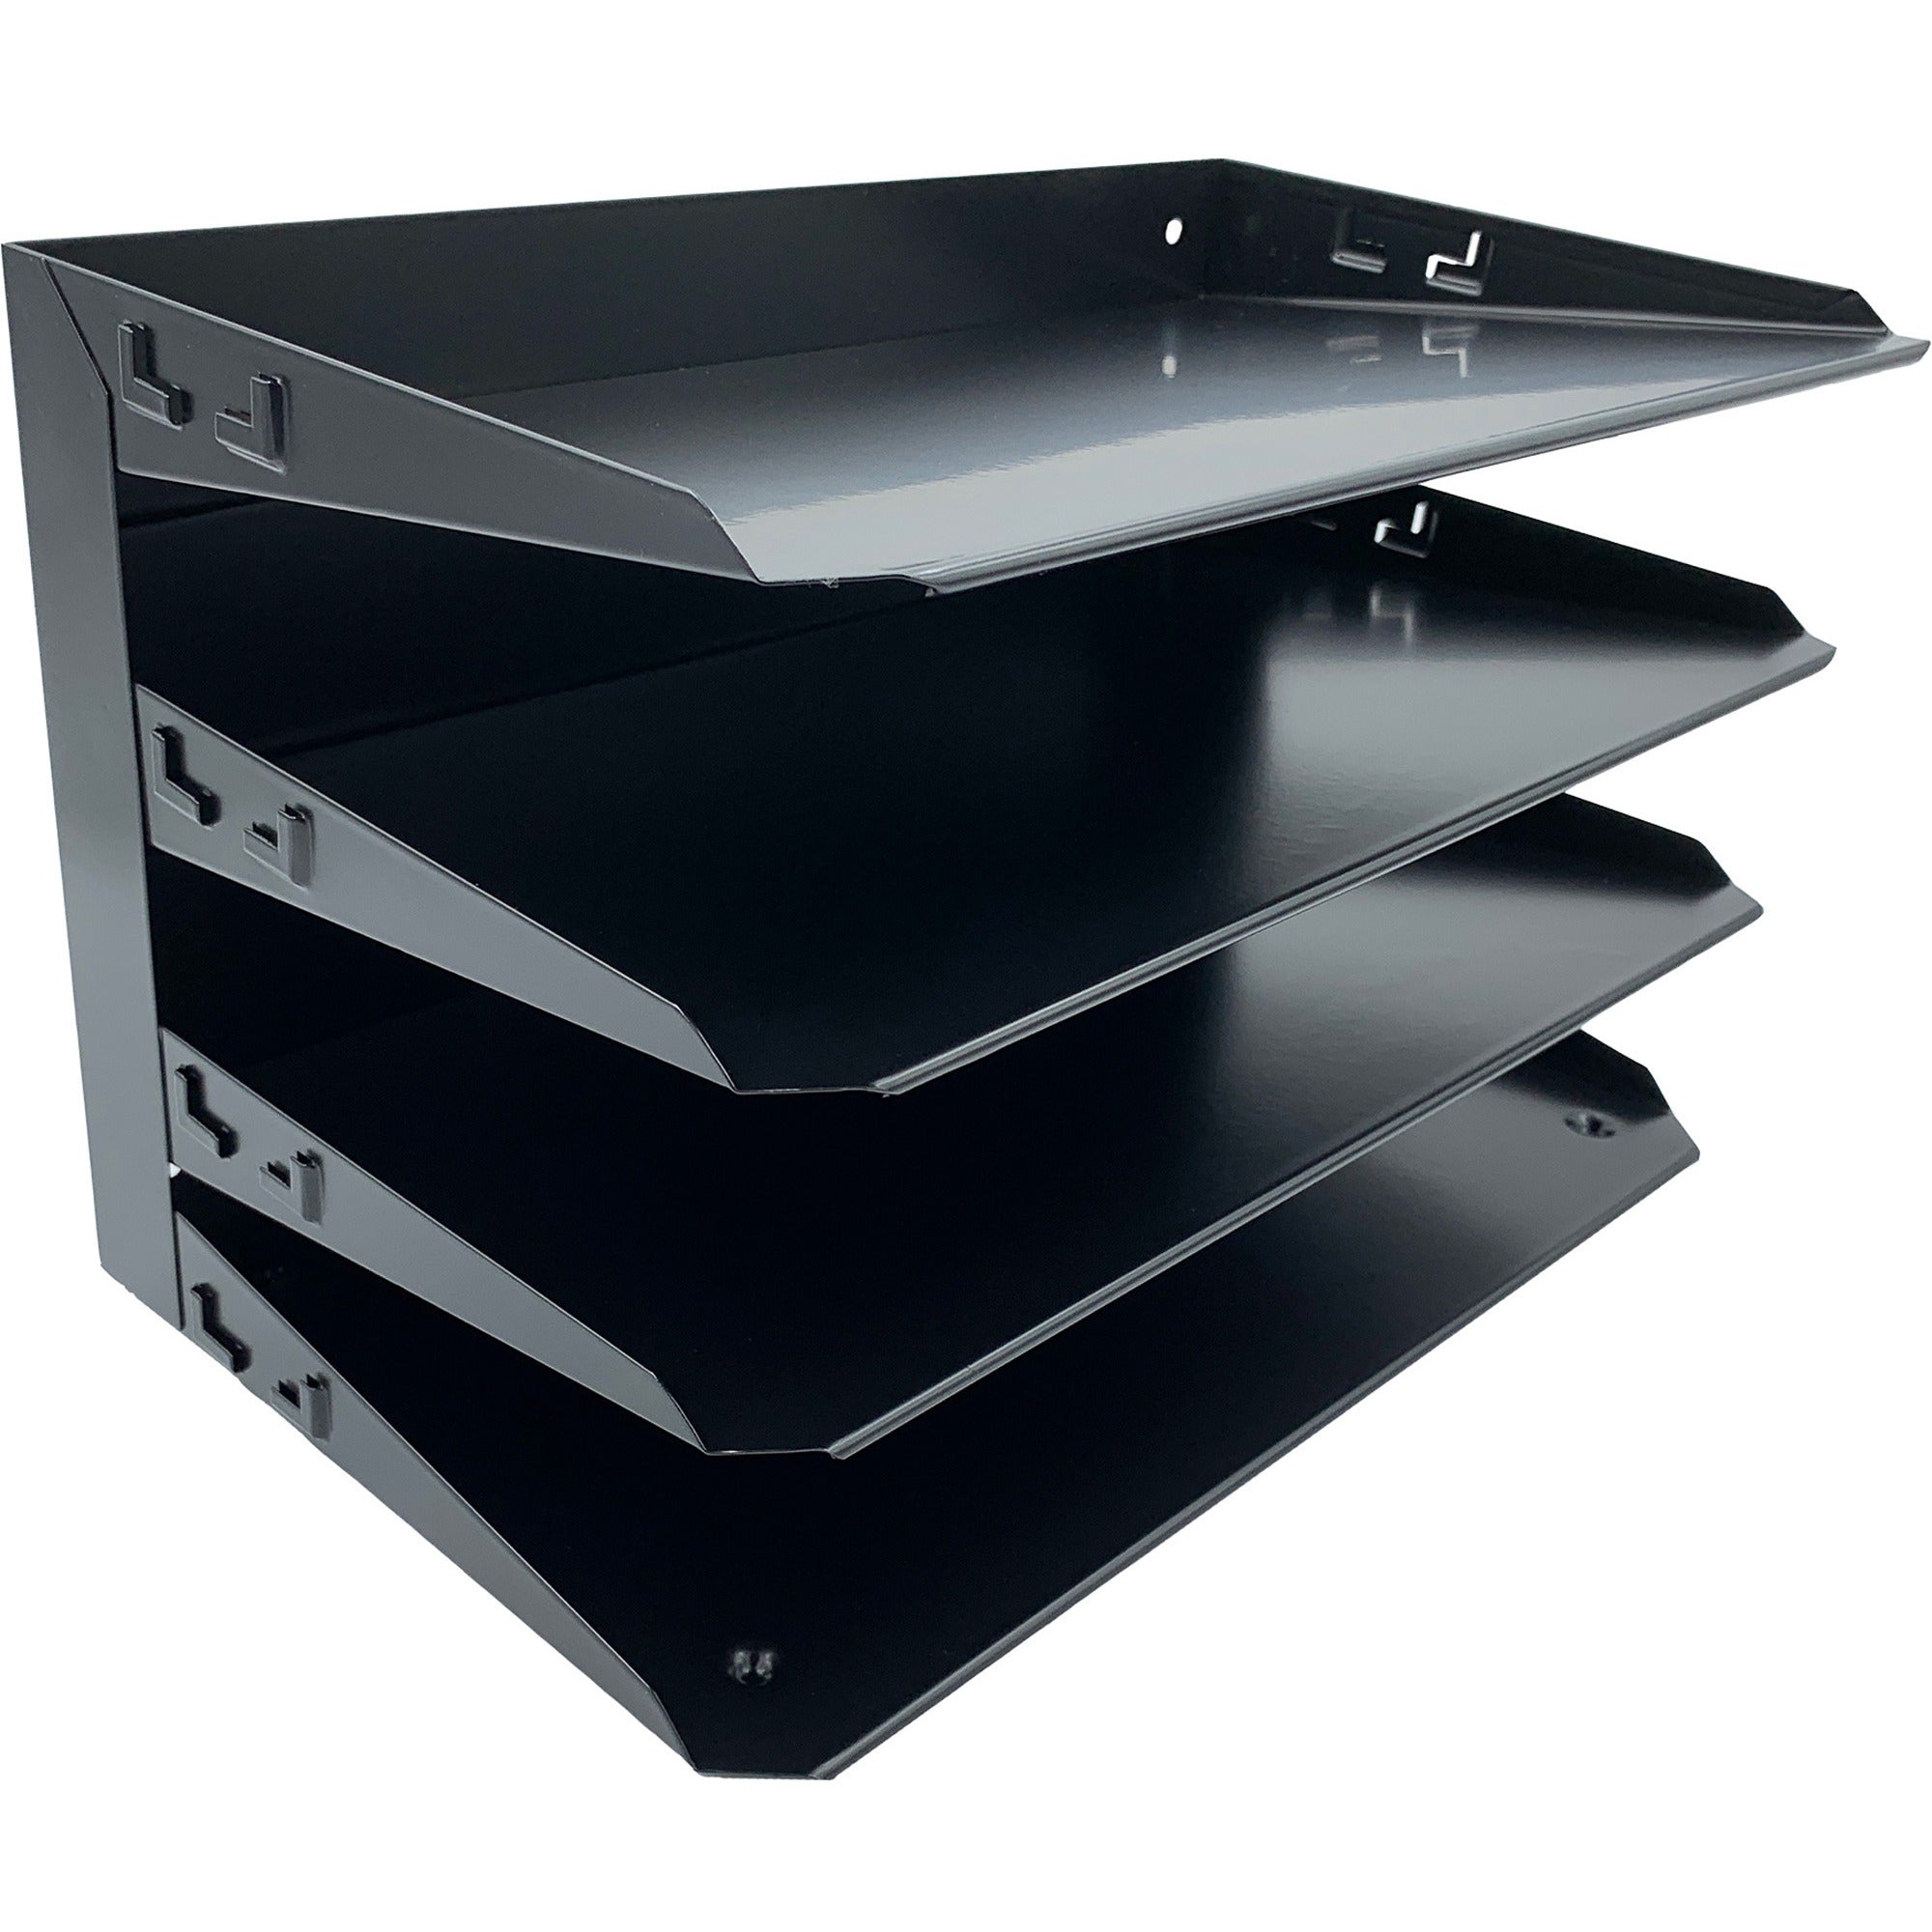 huron-horizontal-slots-desk-organizer-4-compartments-horizontal-15-height-x-93-width-x-86-depth-durable-black-steel-1-each_hurhasz0151 - 3